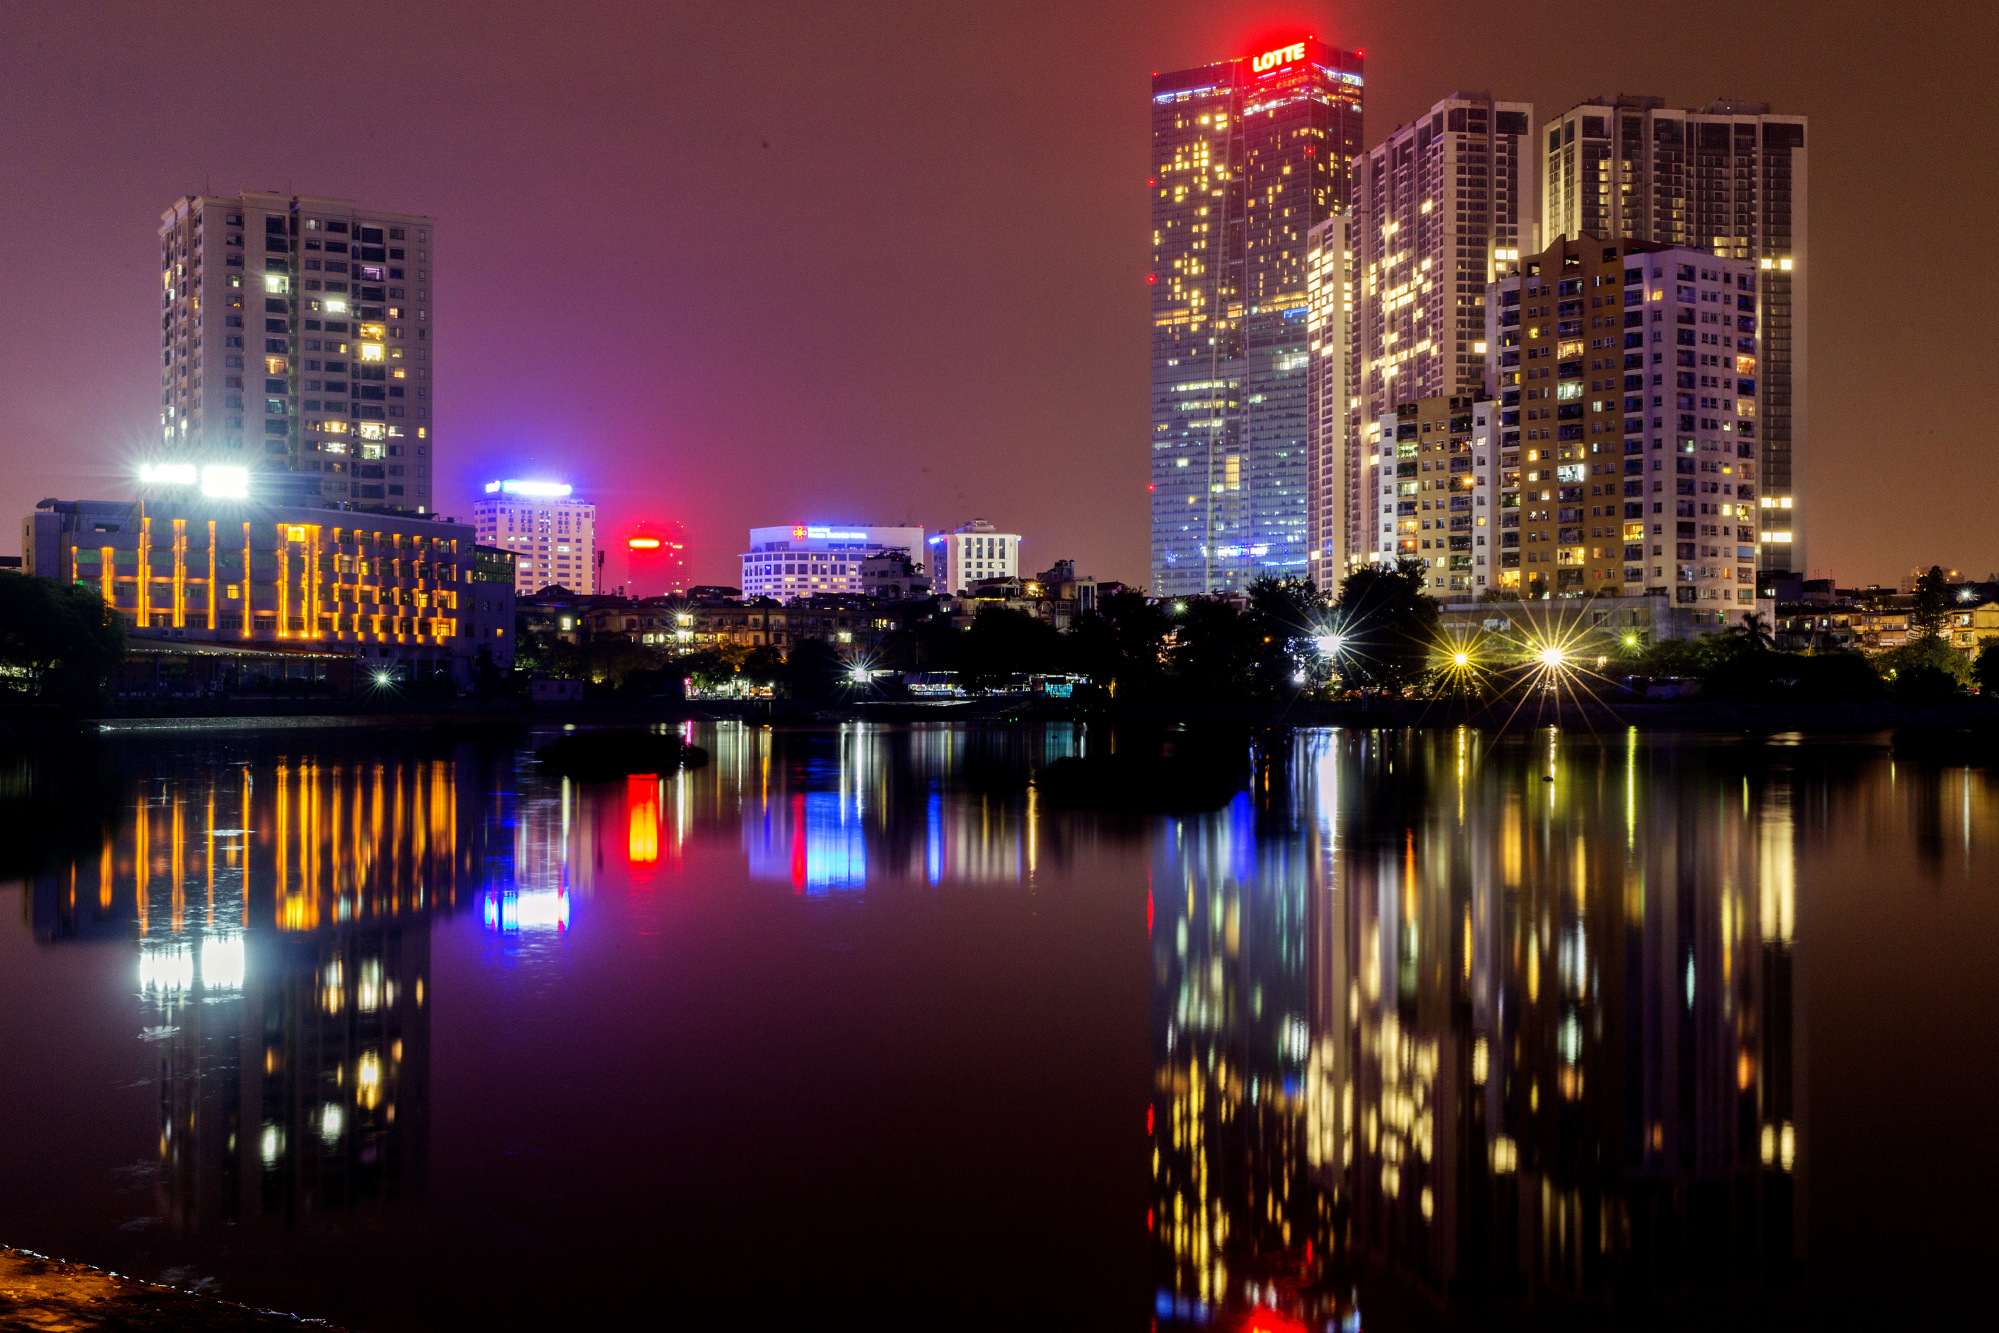 Buildings stand illuminated&nbsp;at night in Hanoi, Vietnam.